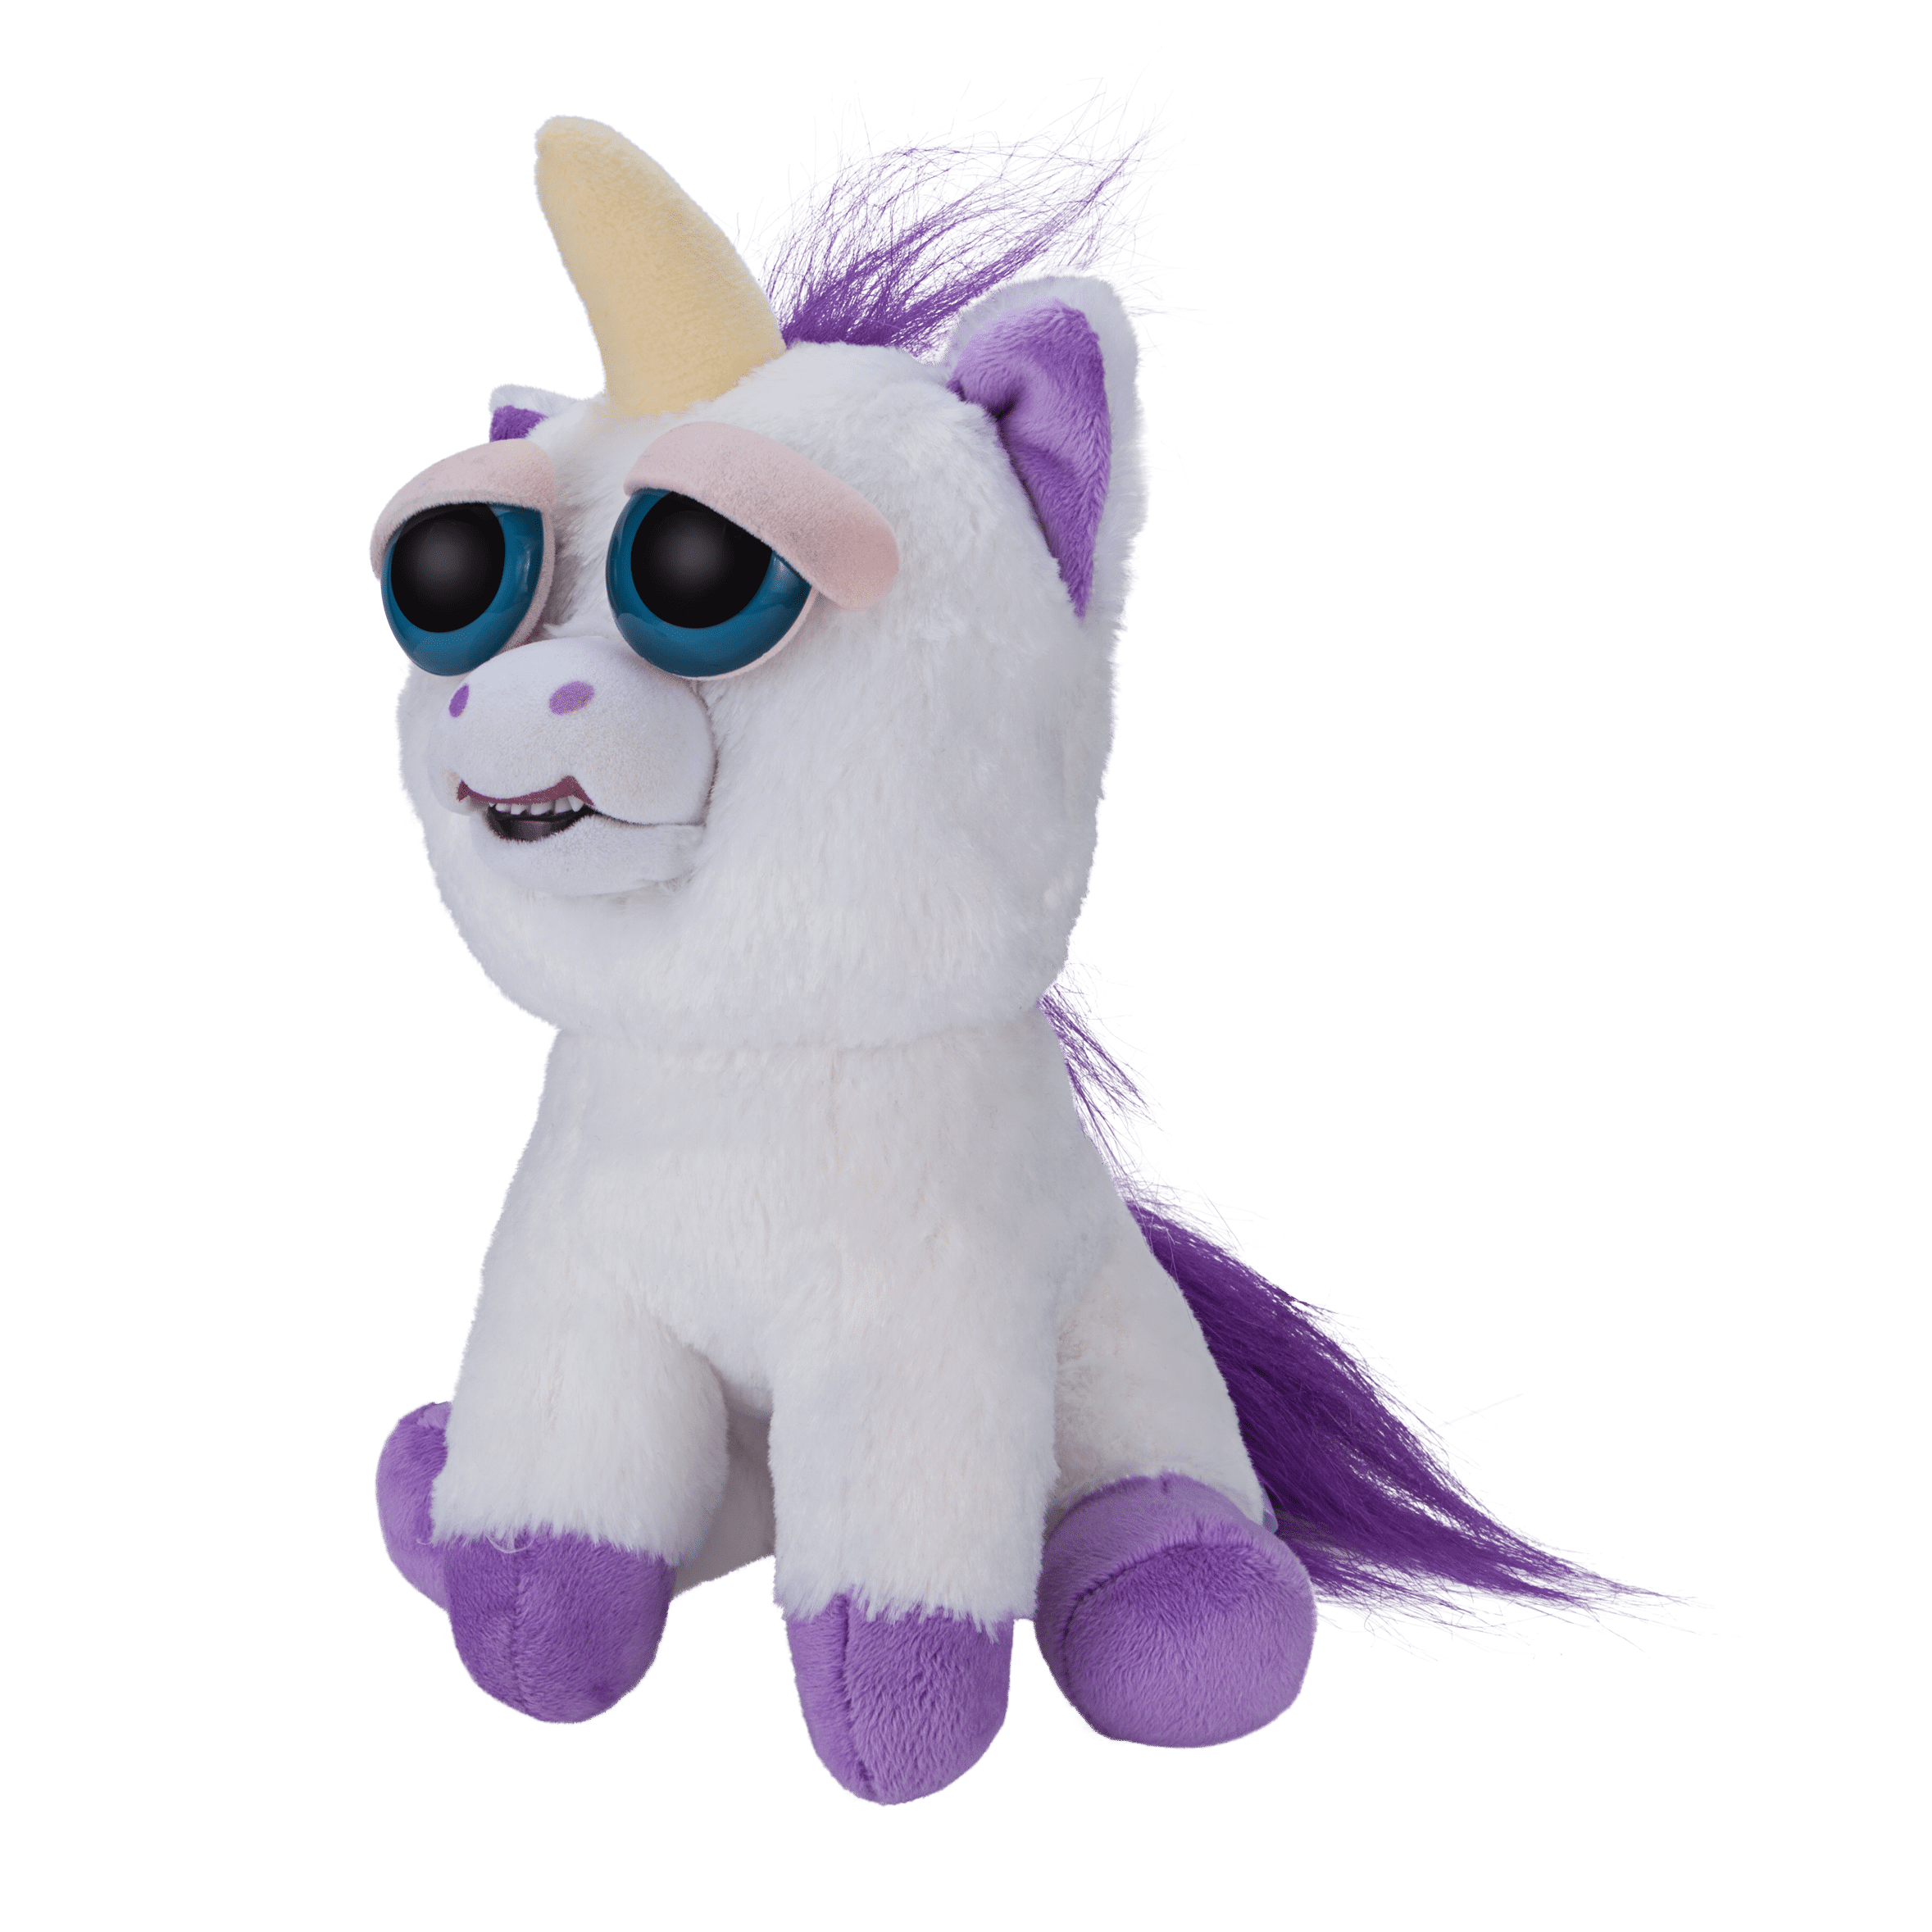 New Feisty Pets Unicorn Glenda Giraffe Owl Dog Fox Plush Kids Fun Toy Gift h41 